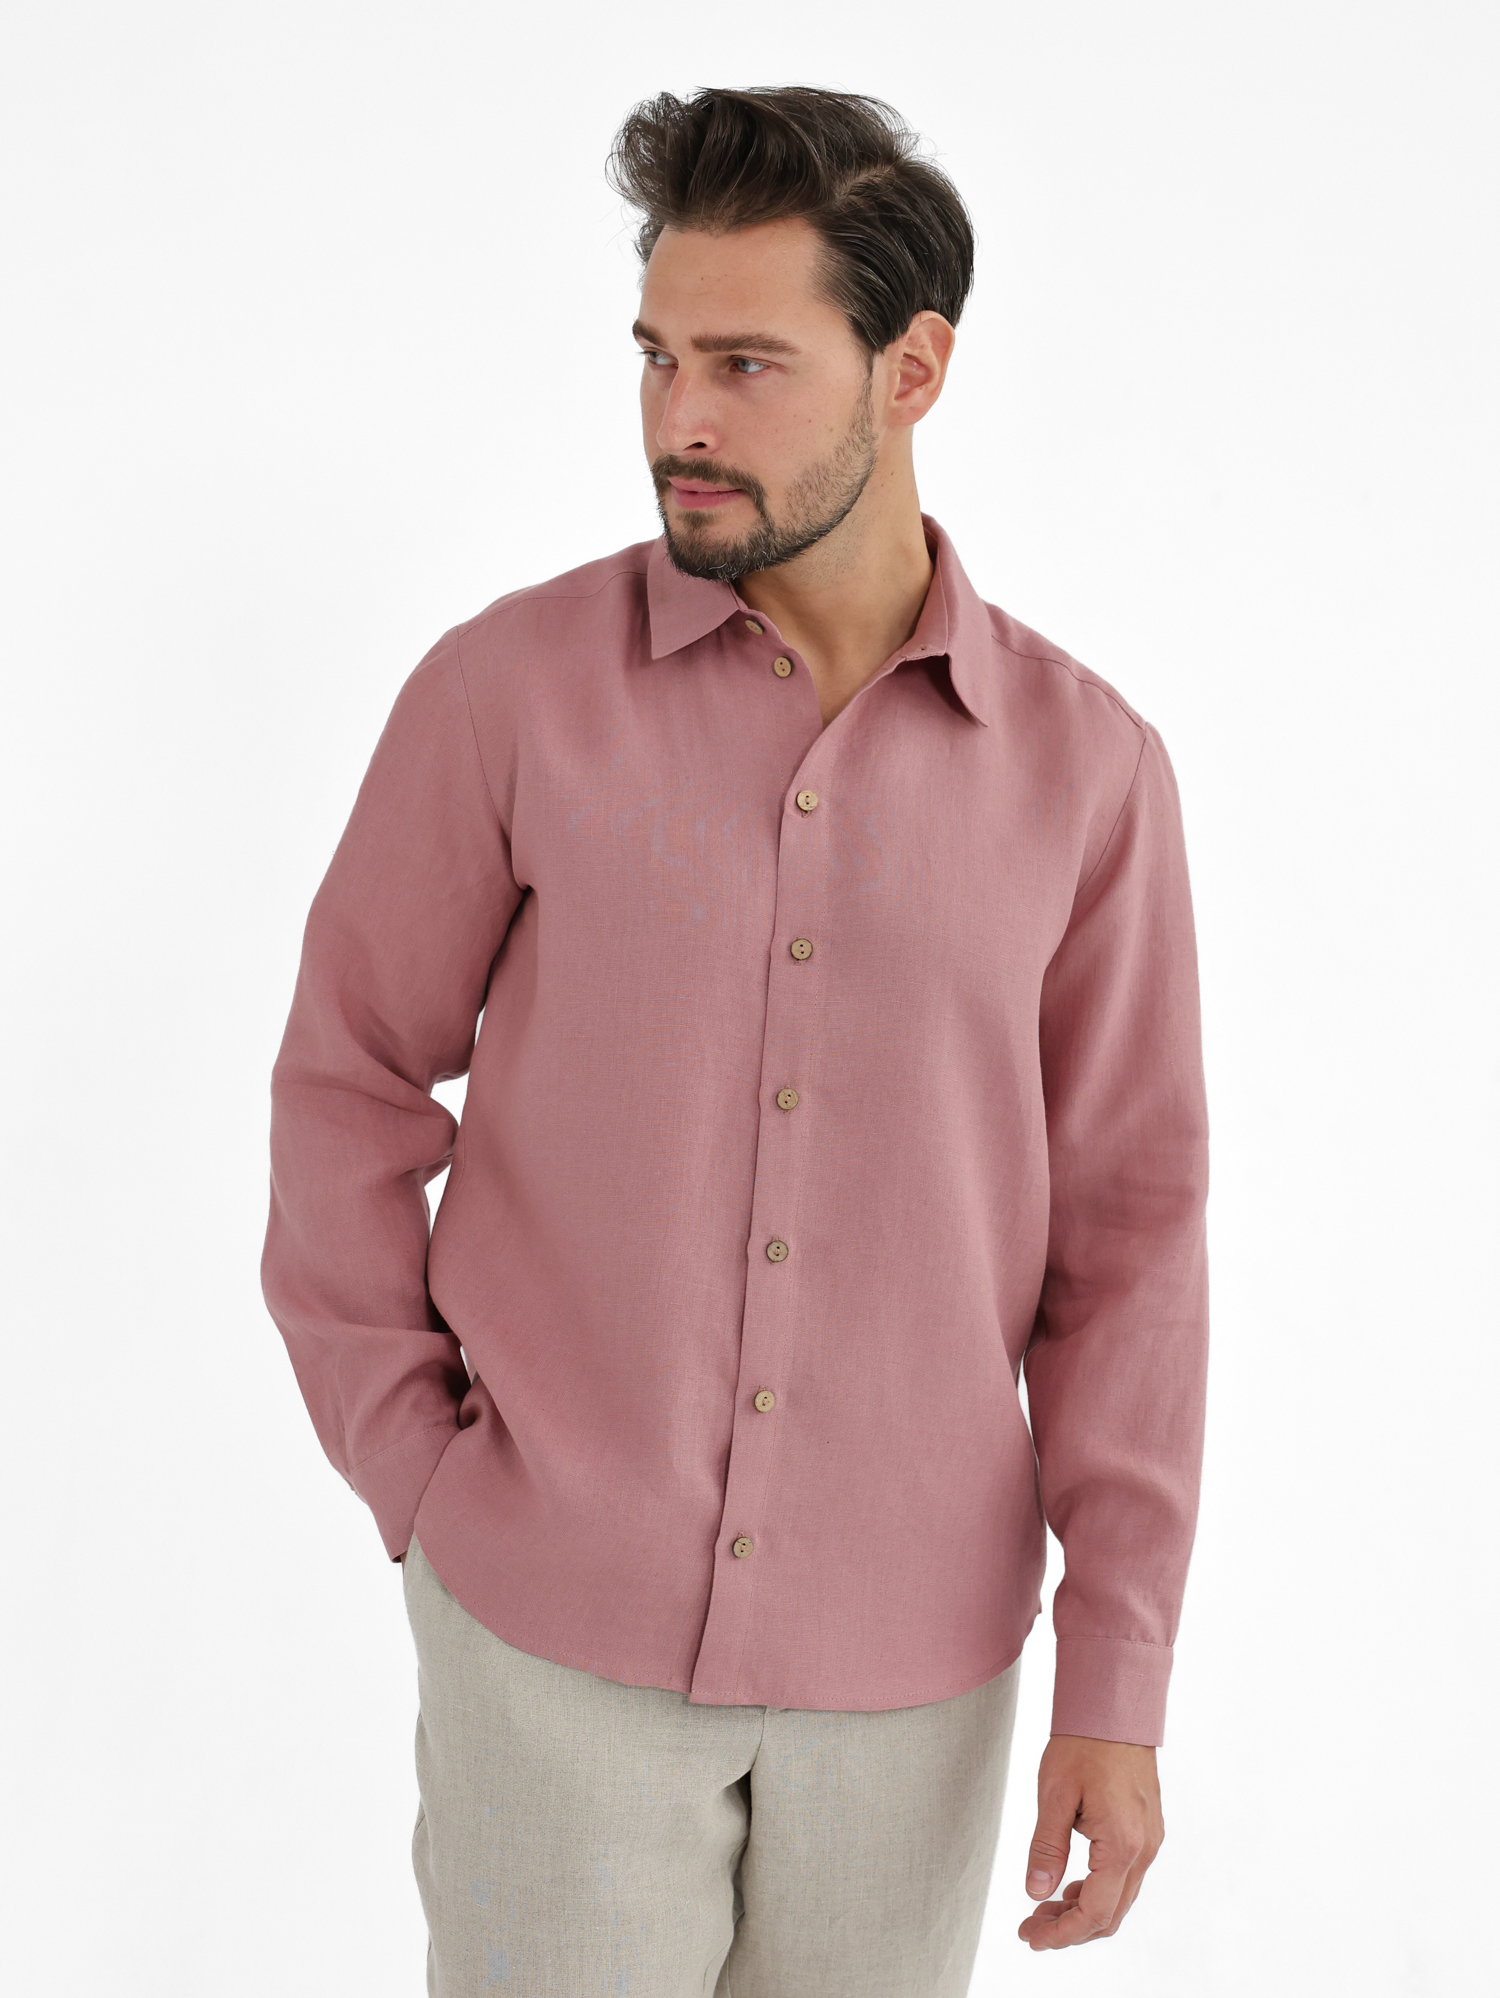 różowa lniana koszula męska